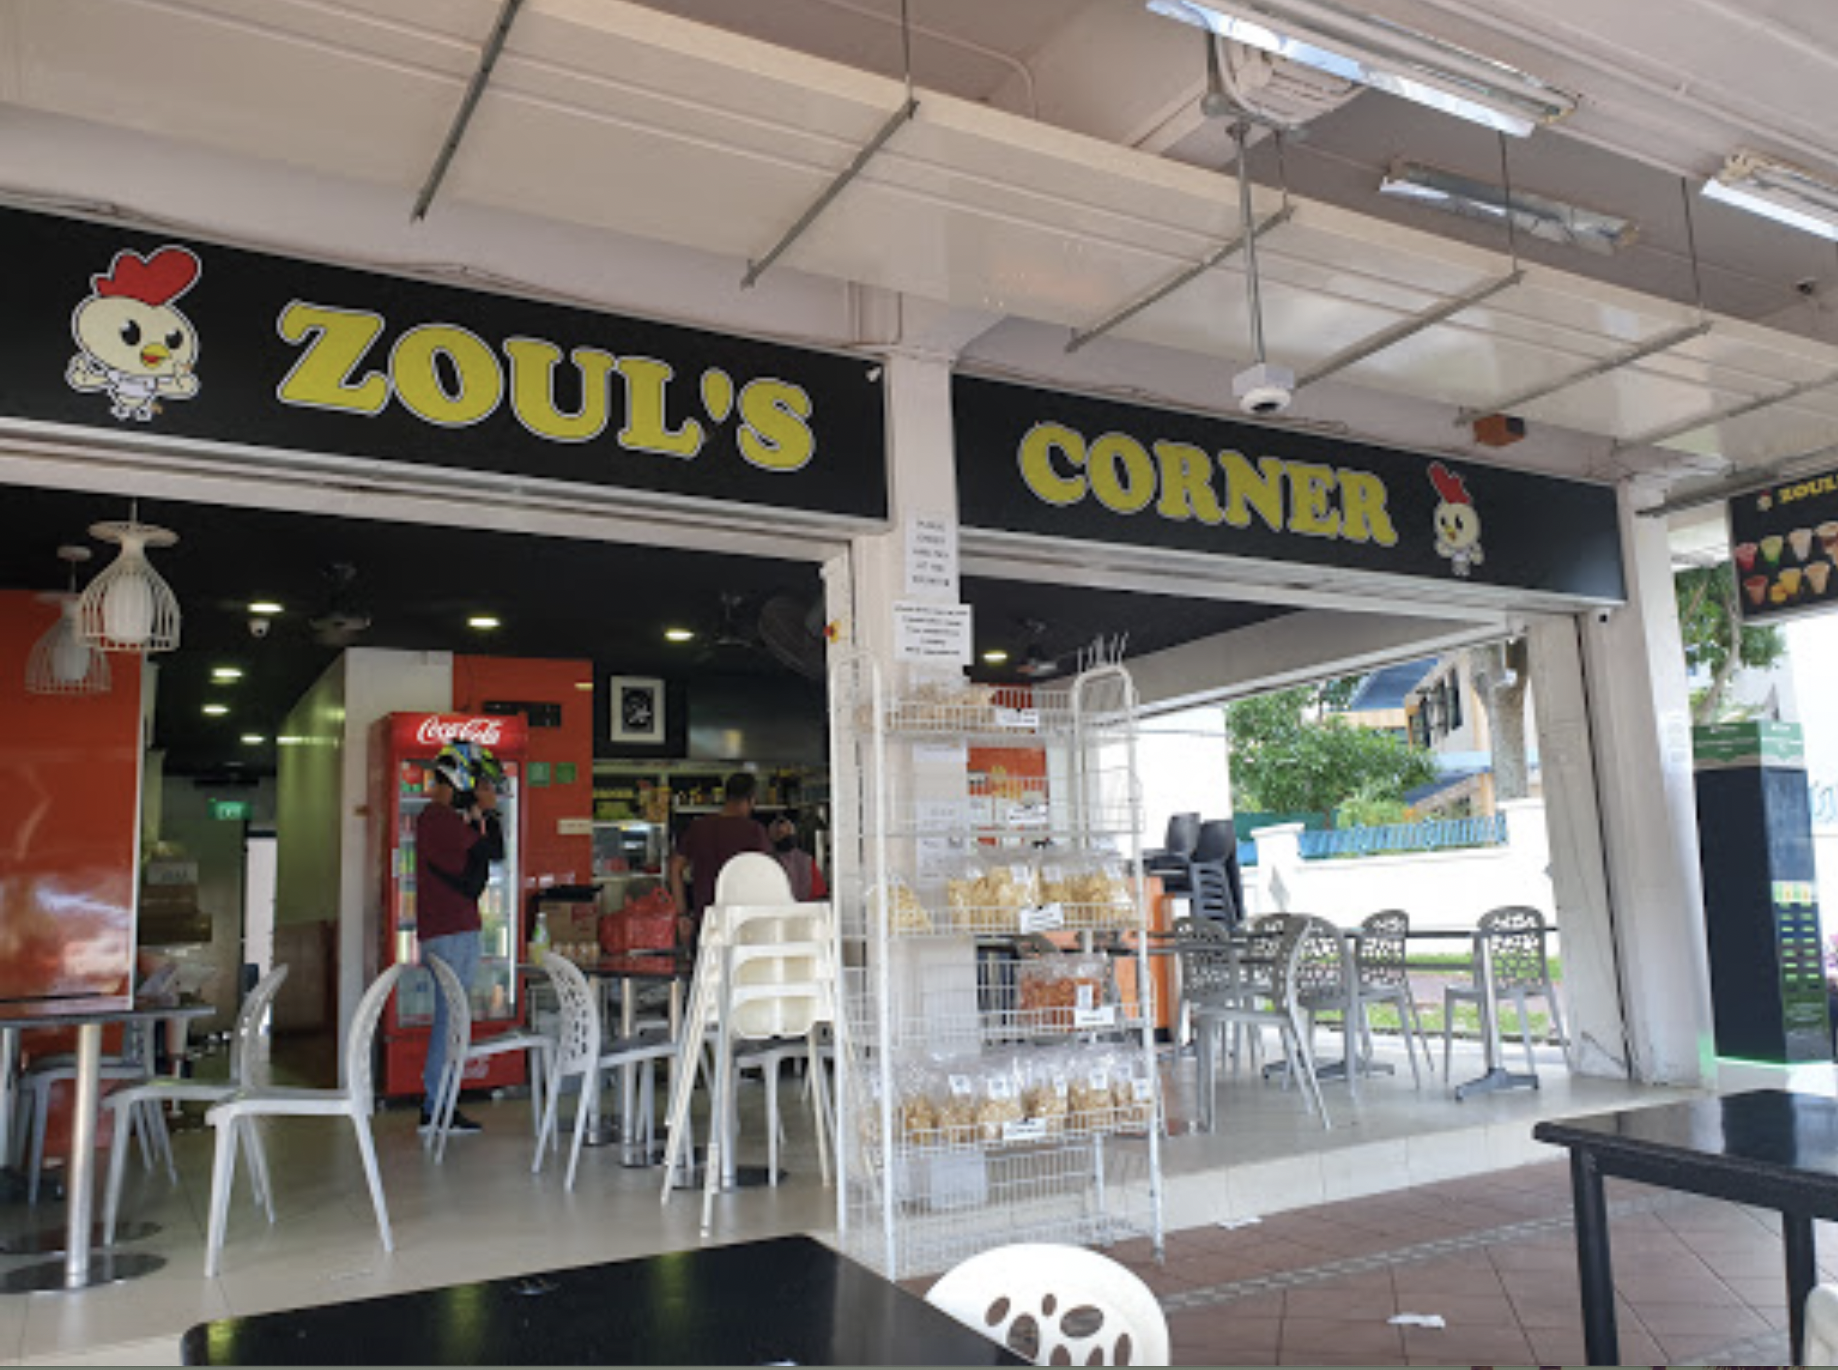 Zoul's Corner Entrance